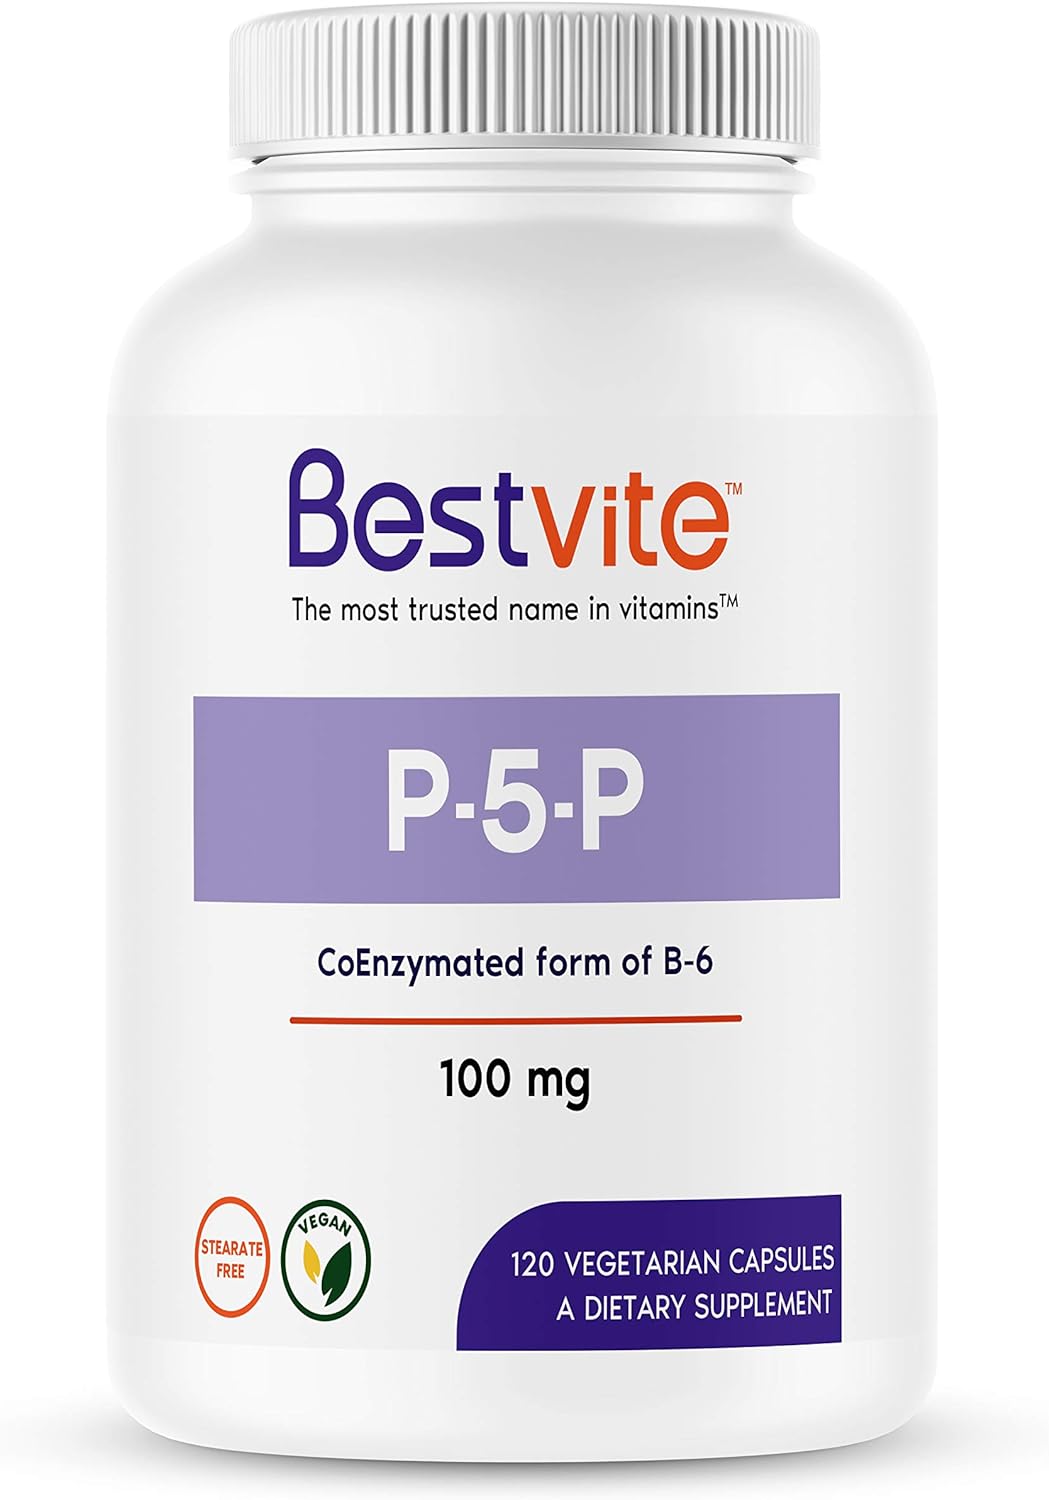 BESTVITE P-5-P 100mg (120 Vegetarian Capsules) (CoEnzymated Form of B-6) - No Stearates - Vegan - Non GMO - Gluten Free - No Silicon Dioxide - No Gelatin